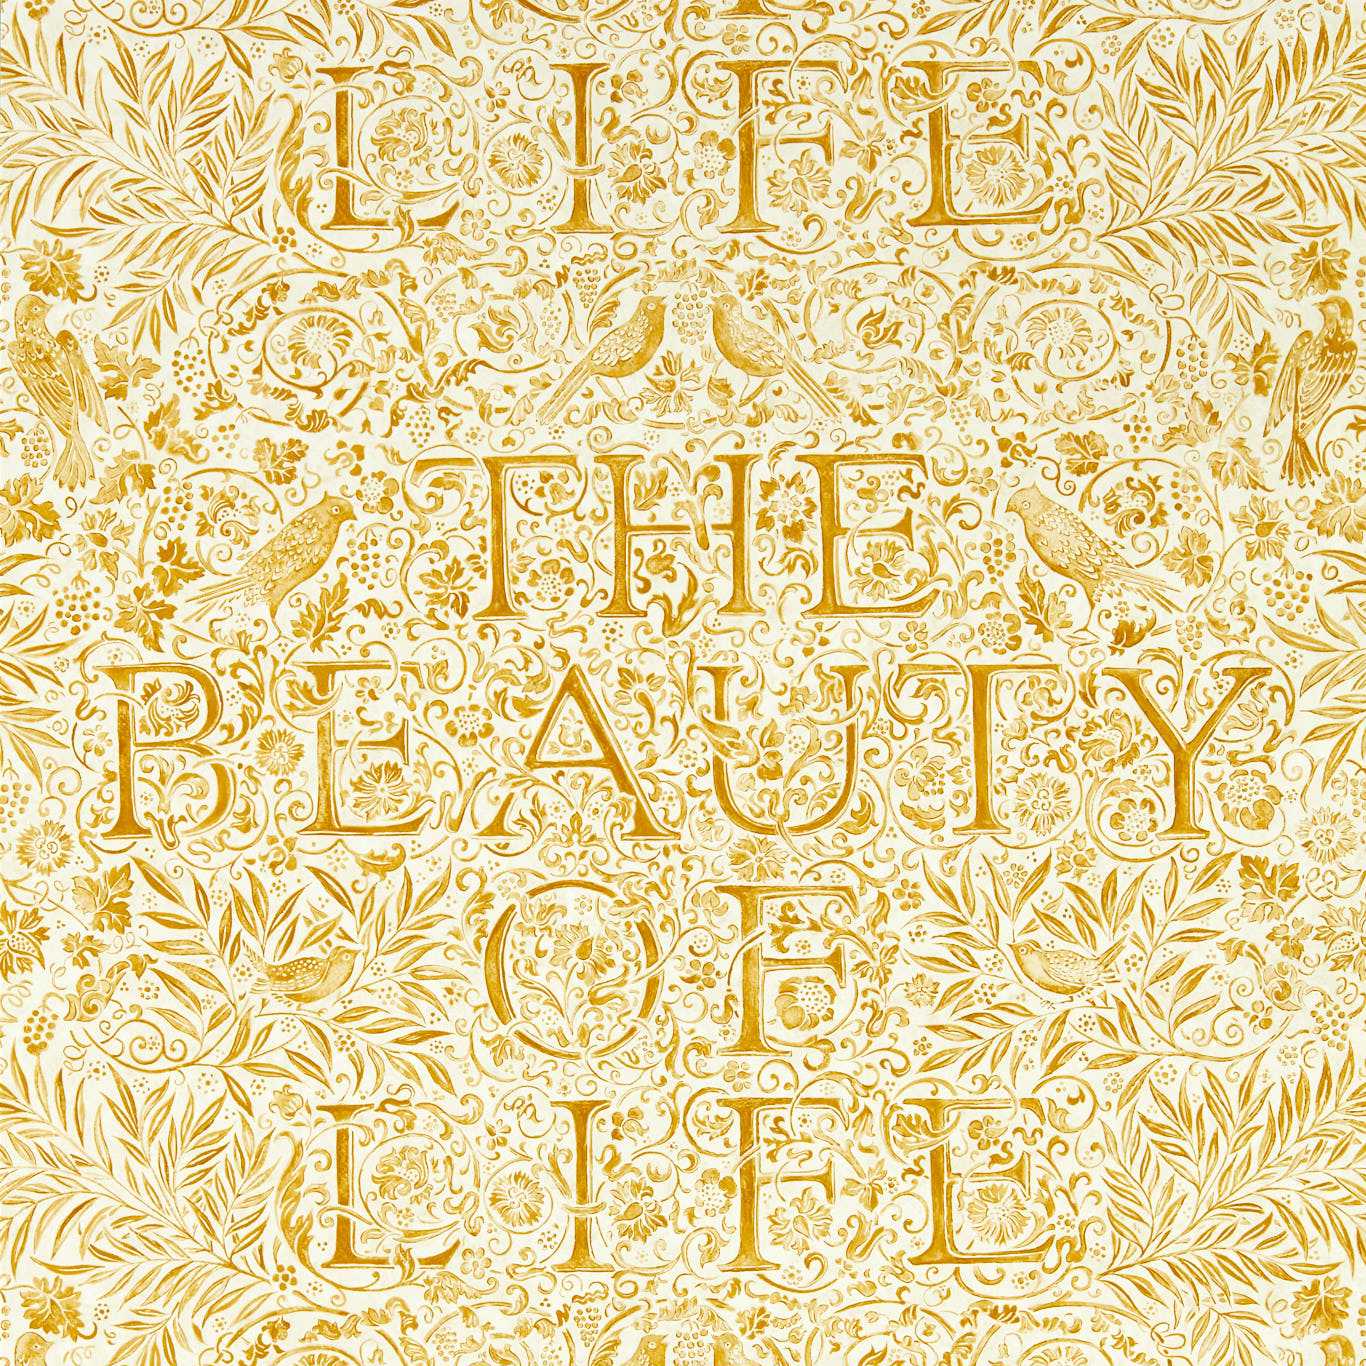 The Beauty of Life Wallpaper - Sunflower - MEWW217191 - Morris & Co - Emmery Walkers - Morris Wallpaper